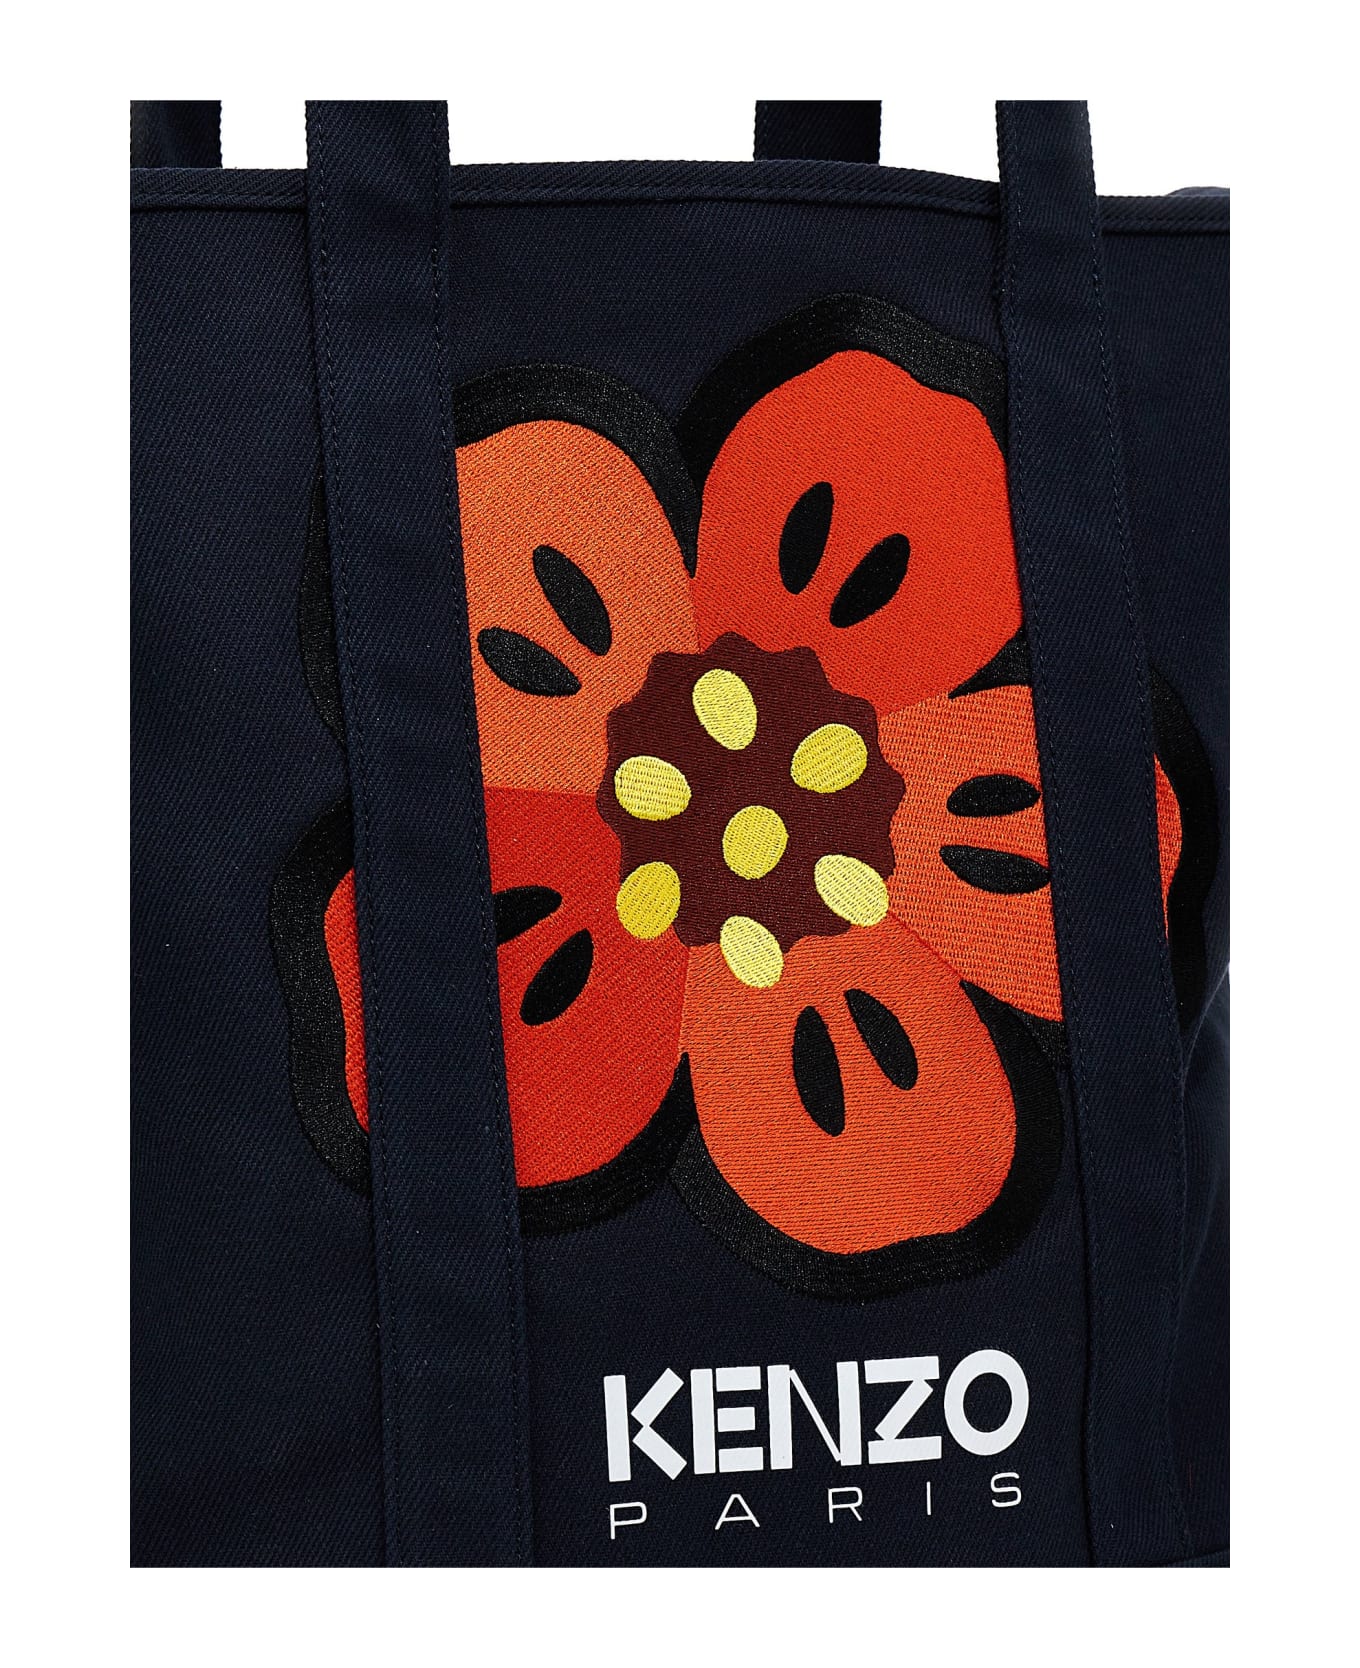 Kenzo Boke Flower Shoulder Tote Bag - BLUE